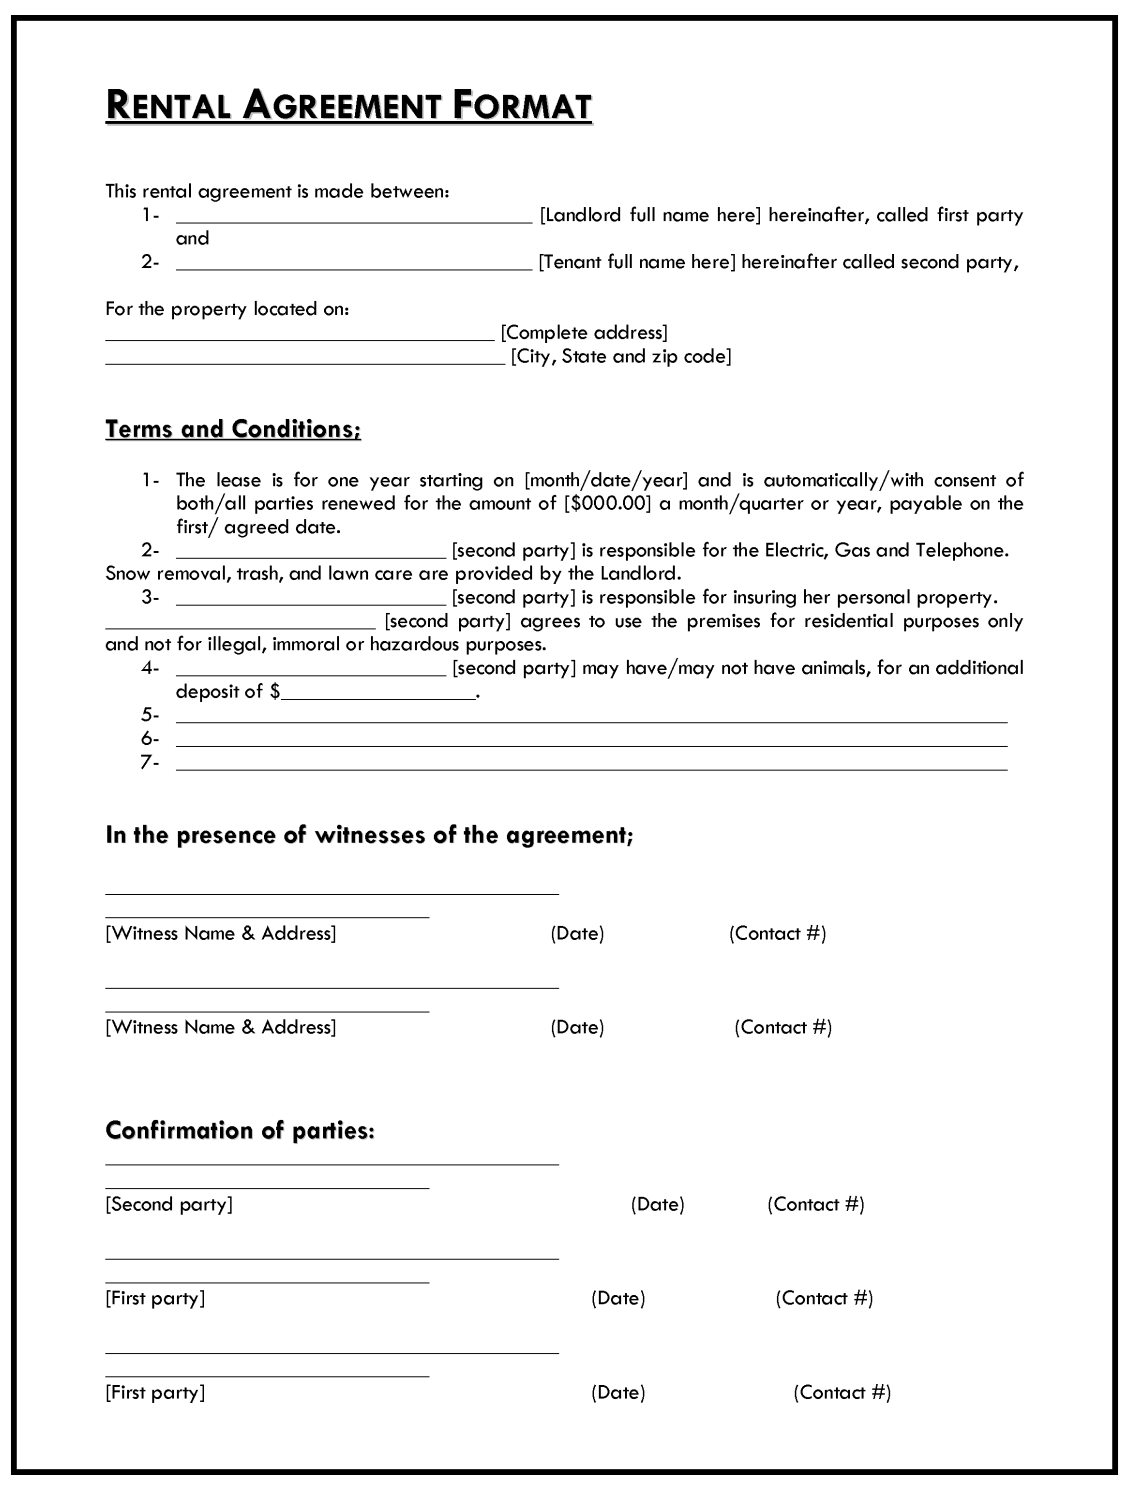 rental-agreement-format-template